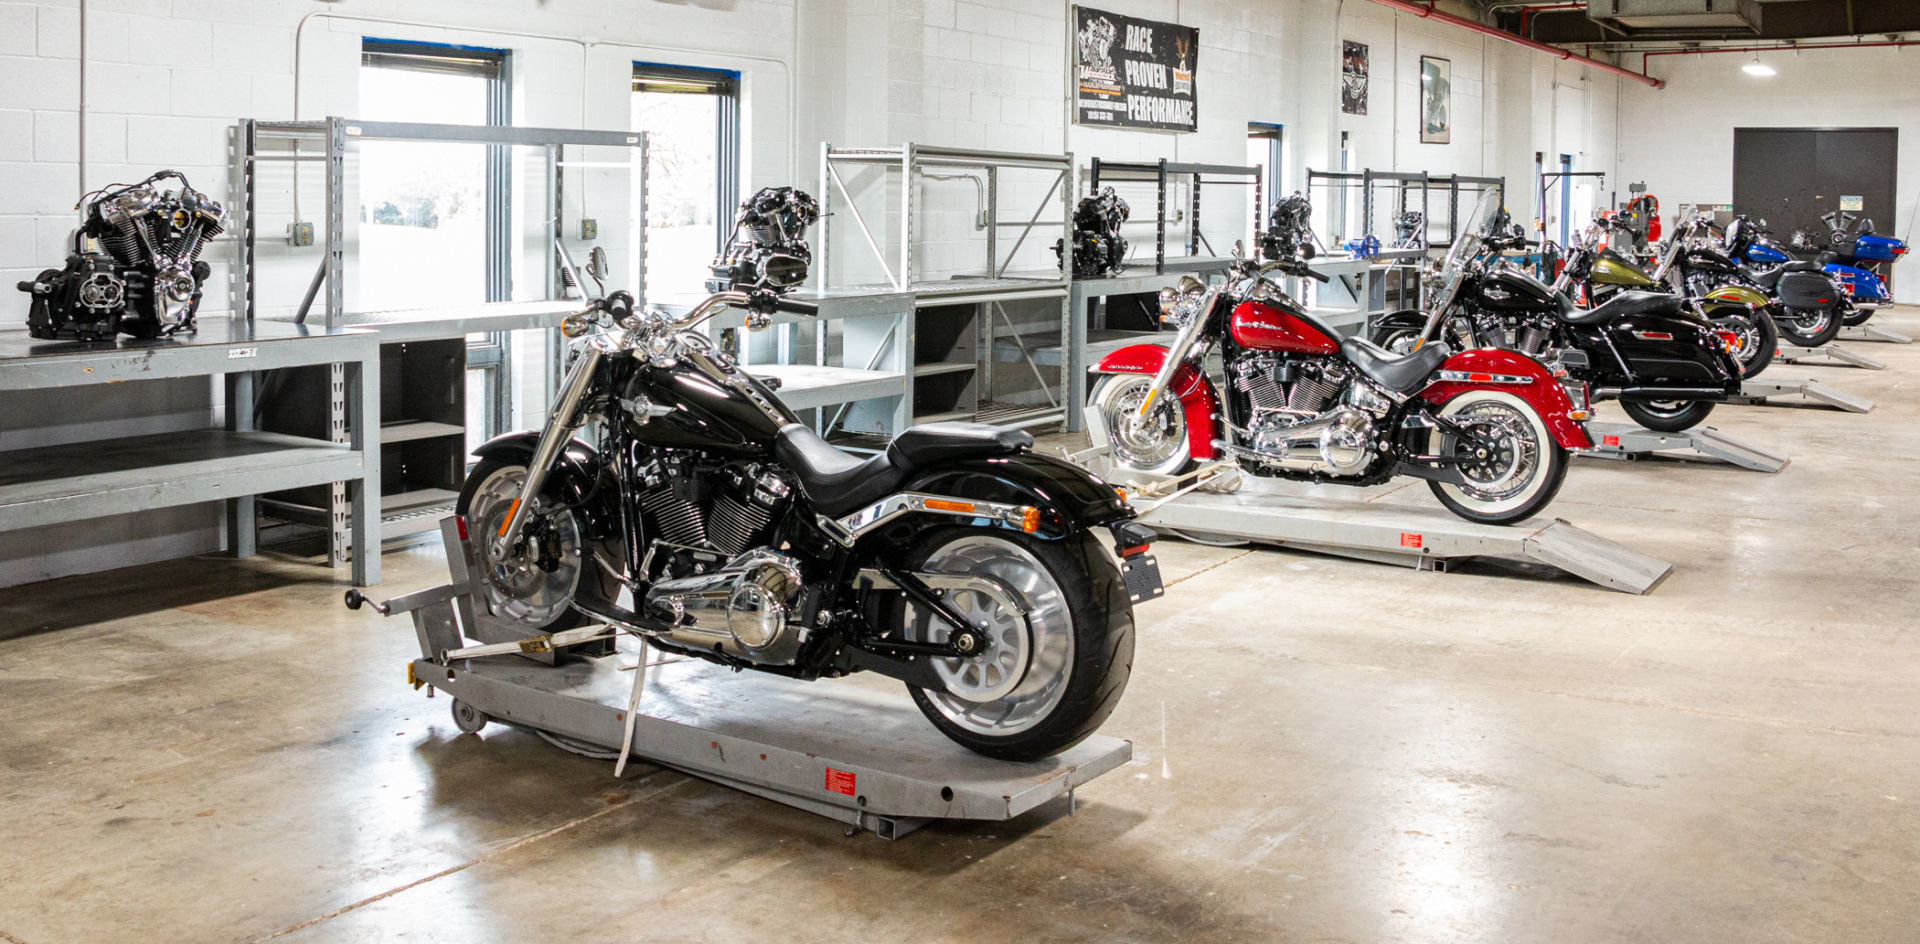 Midwest Motorcycle Mechanic School Opens In Illinois - Roadracing ...